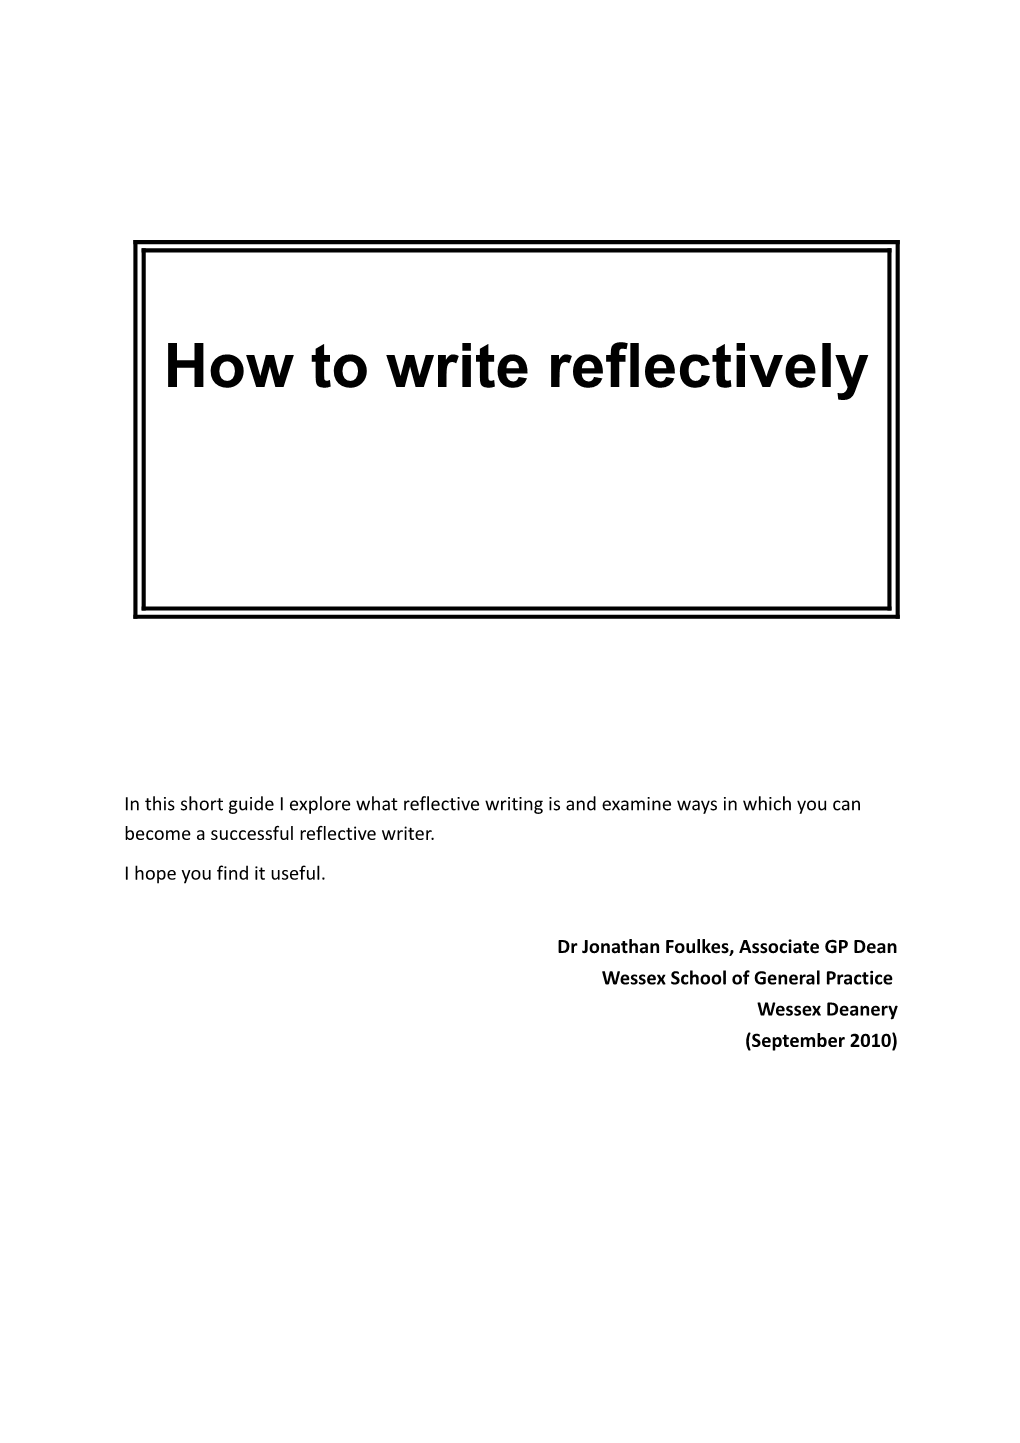 Reflecive Practice Guide